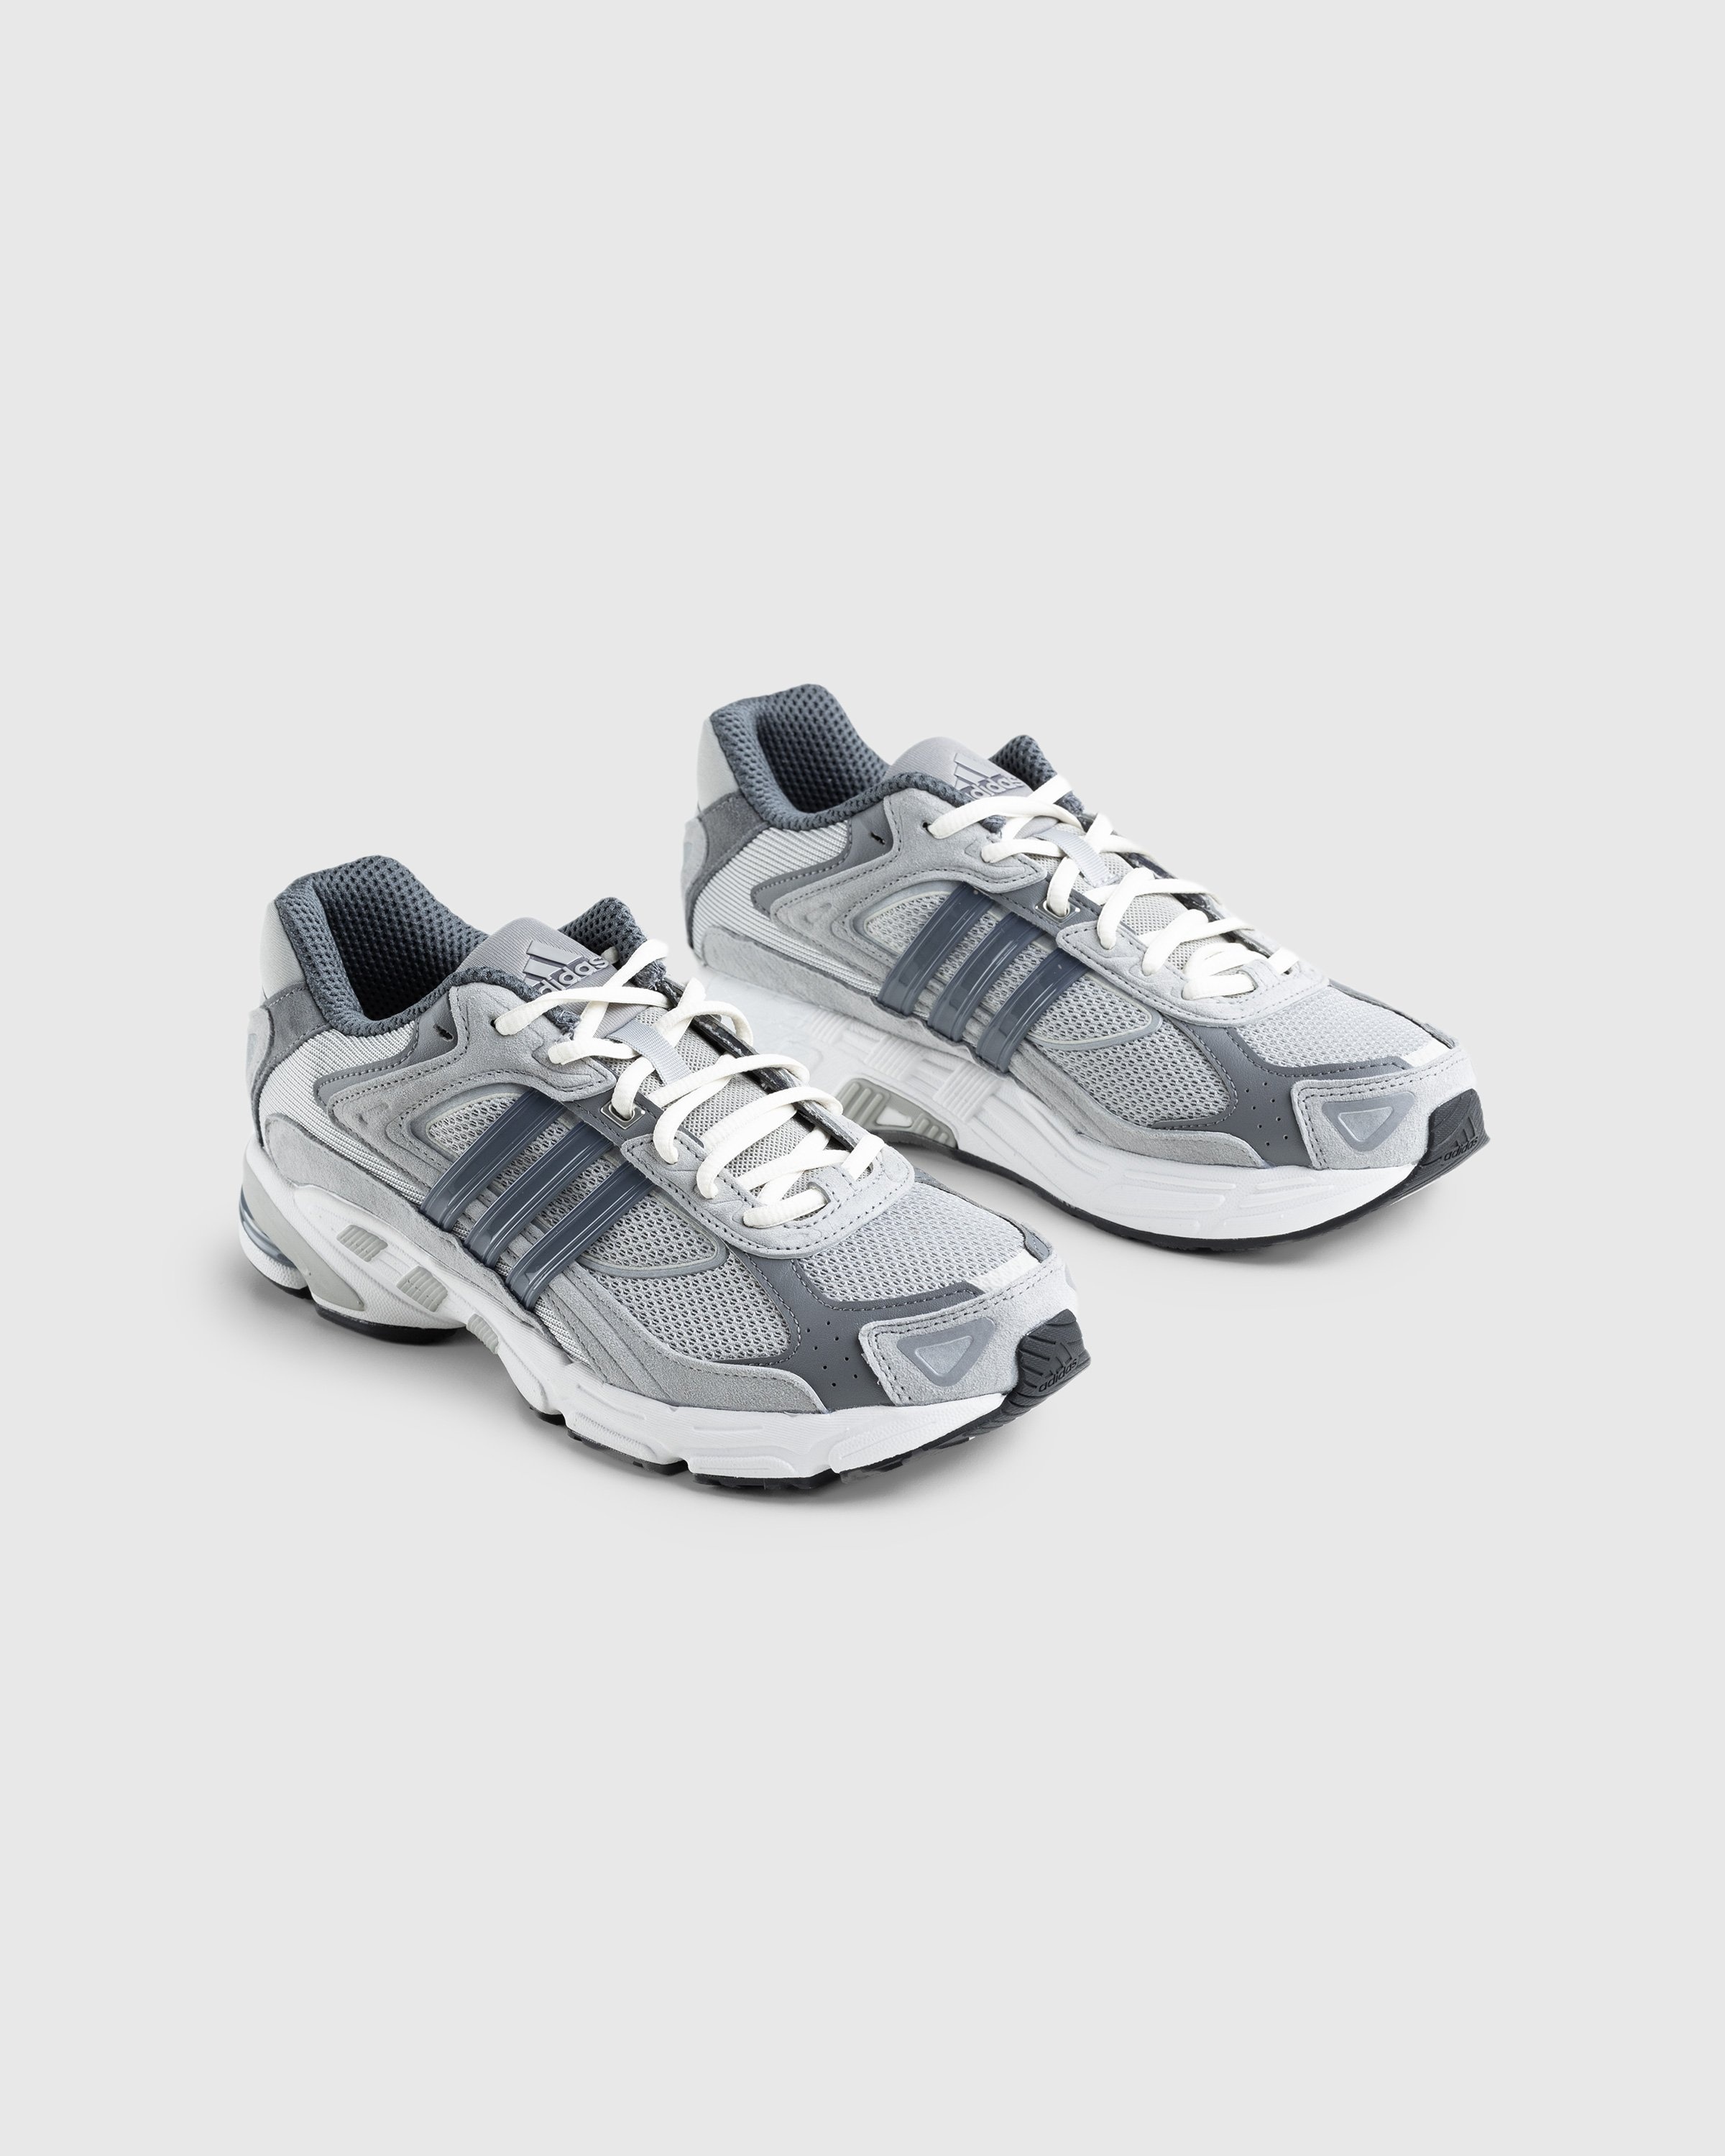 Adidas – Response CL Grey - Sneakers - Grey - Image 3